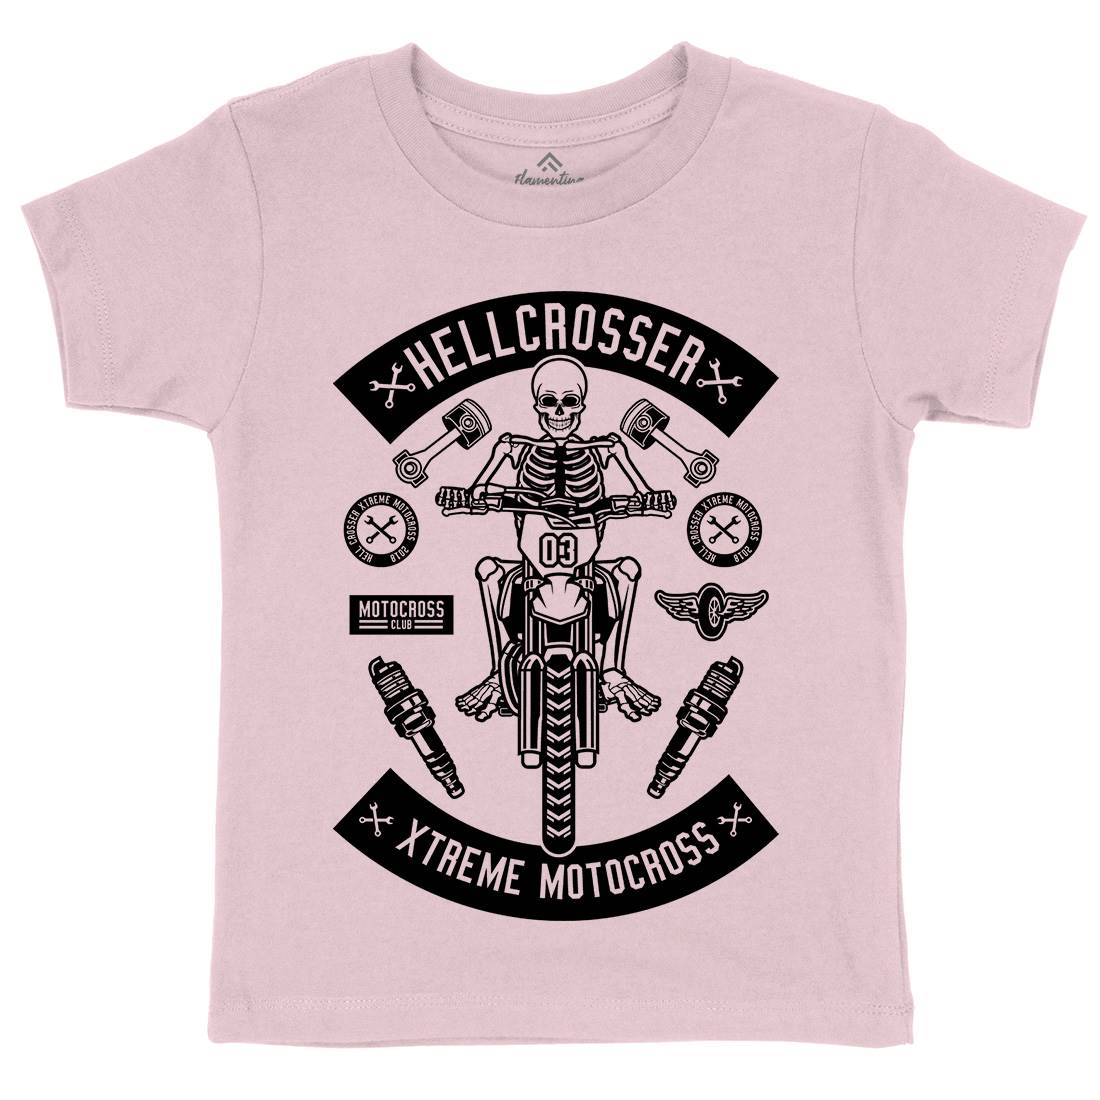 Hell Crosser Kids Crew Neck T-Shirt Motorcycles B553